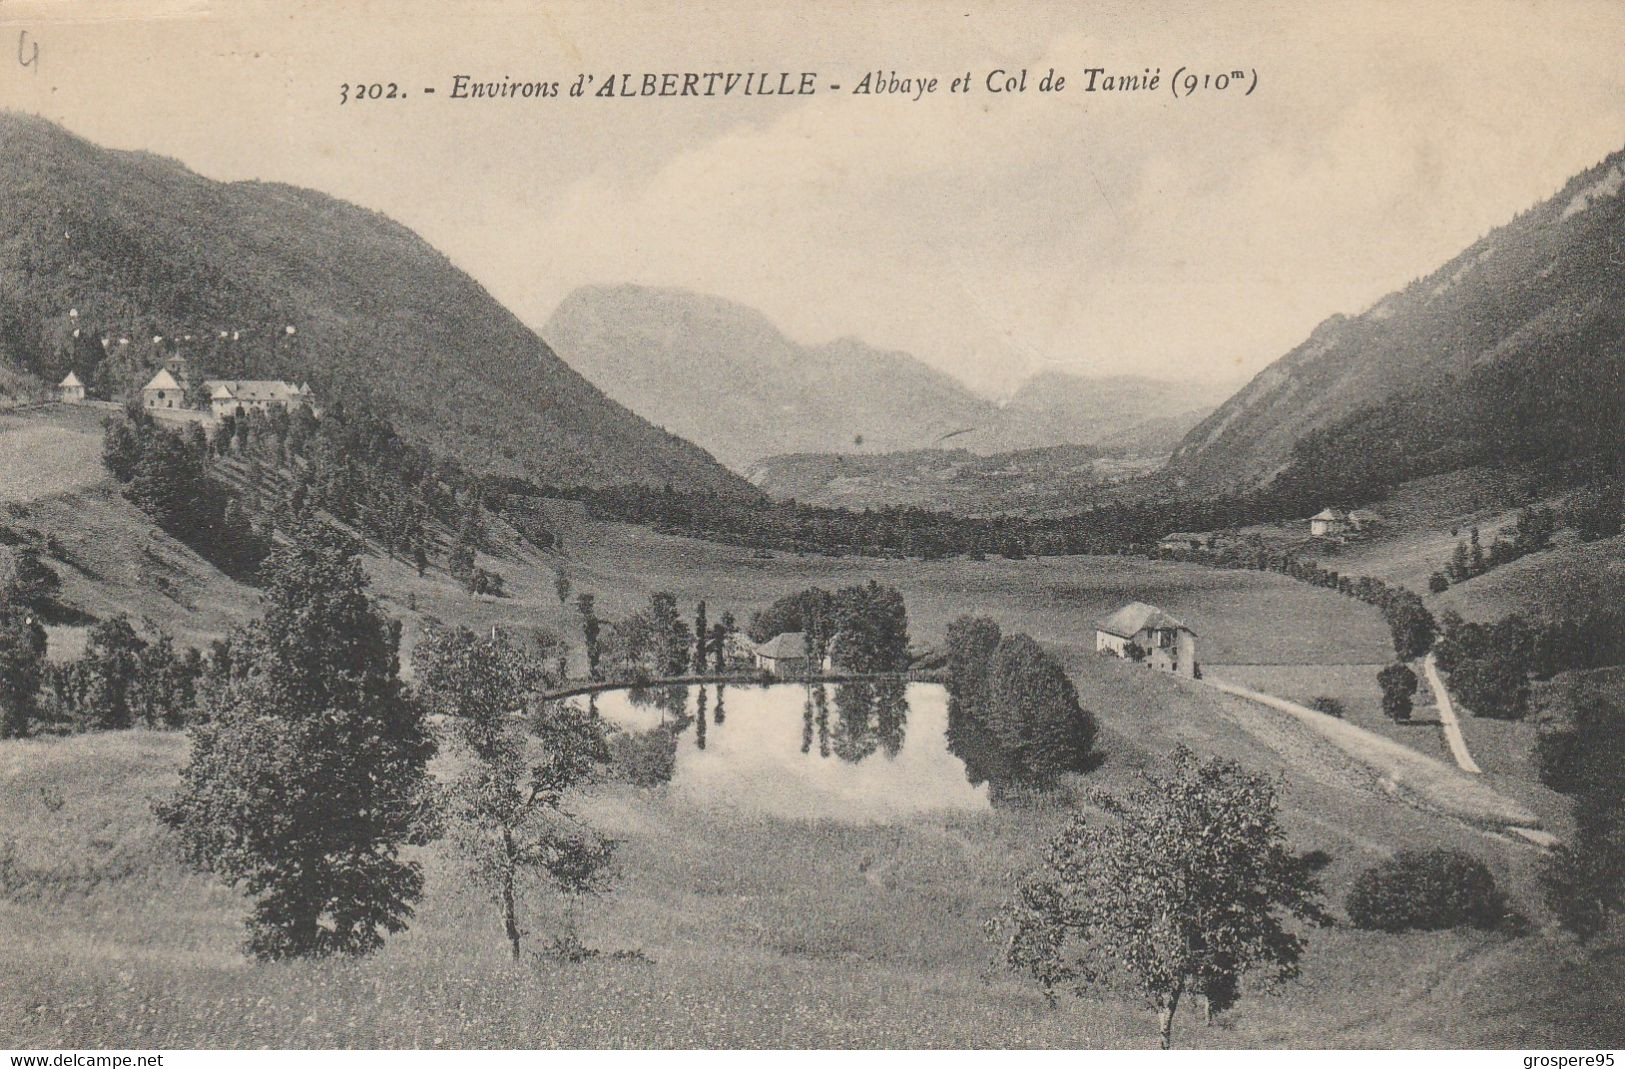 ENVIRONS D'ALBERTVILLE ABBAYE ET COL DE TAMIE 1914 - Albertville